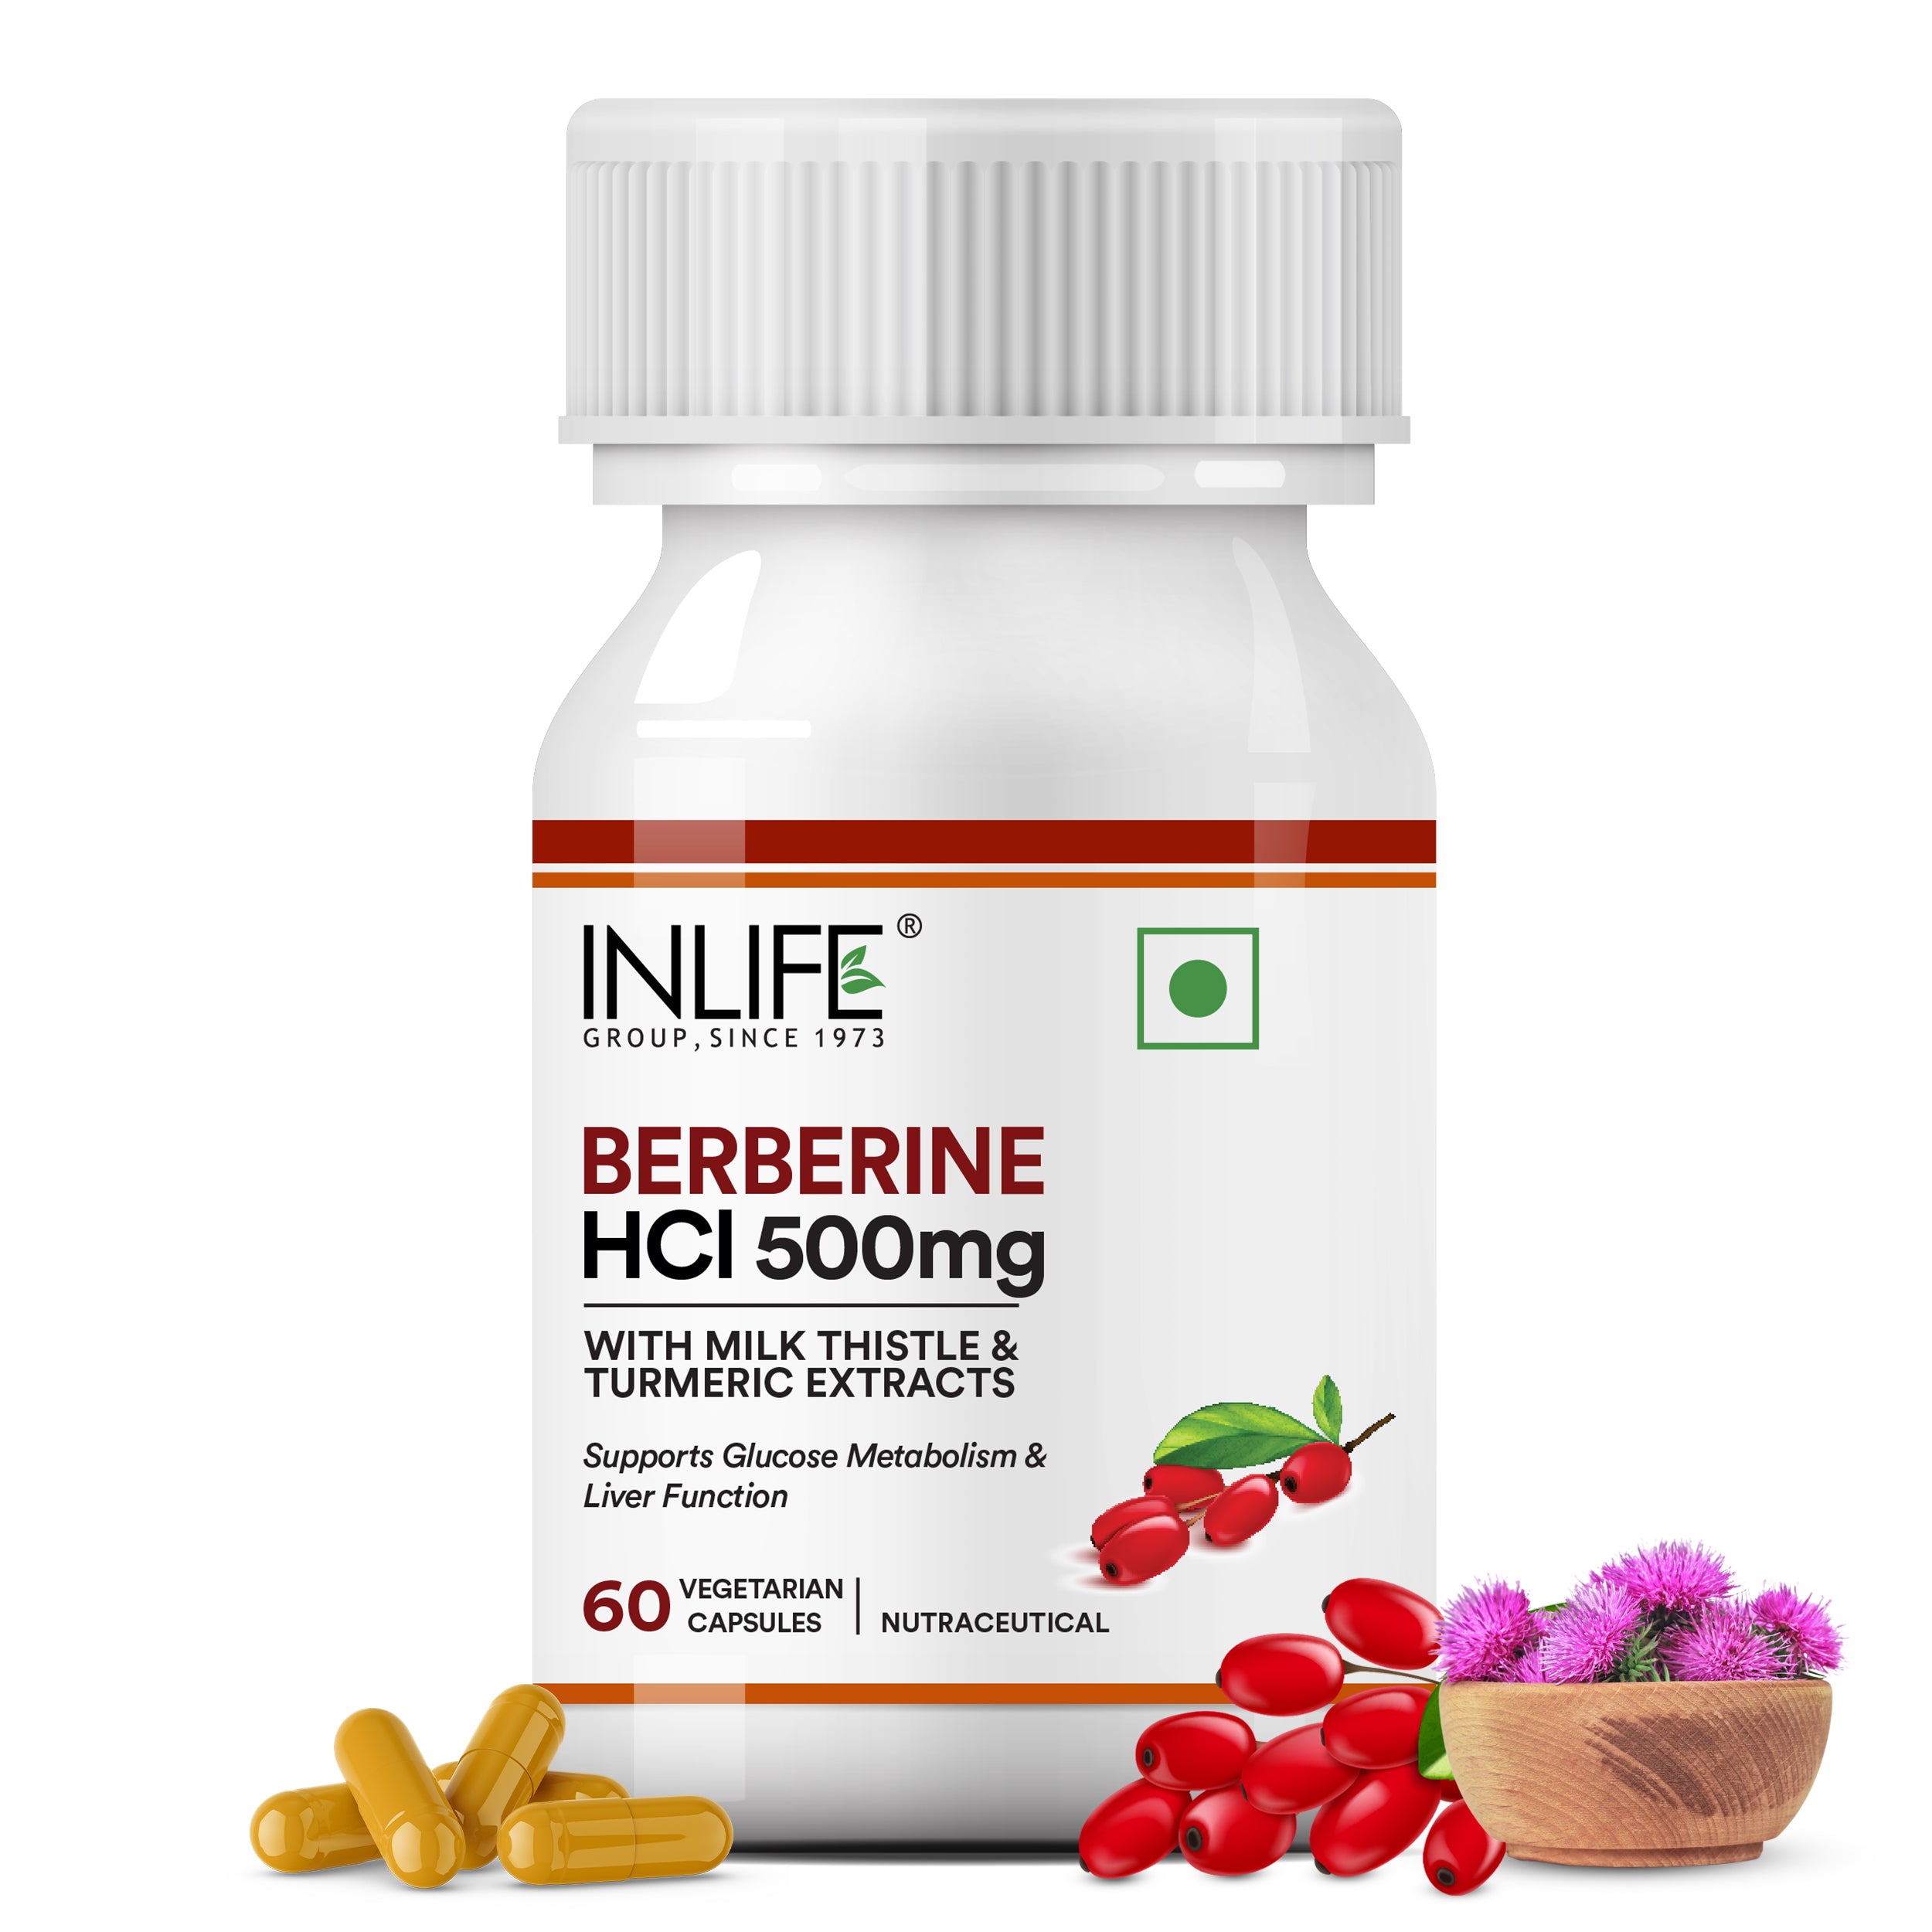 INLIFE Berberine Supplement with HCl 500mg, Milk Thistle & Turmeric | 60 Veg. Capsules